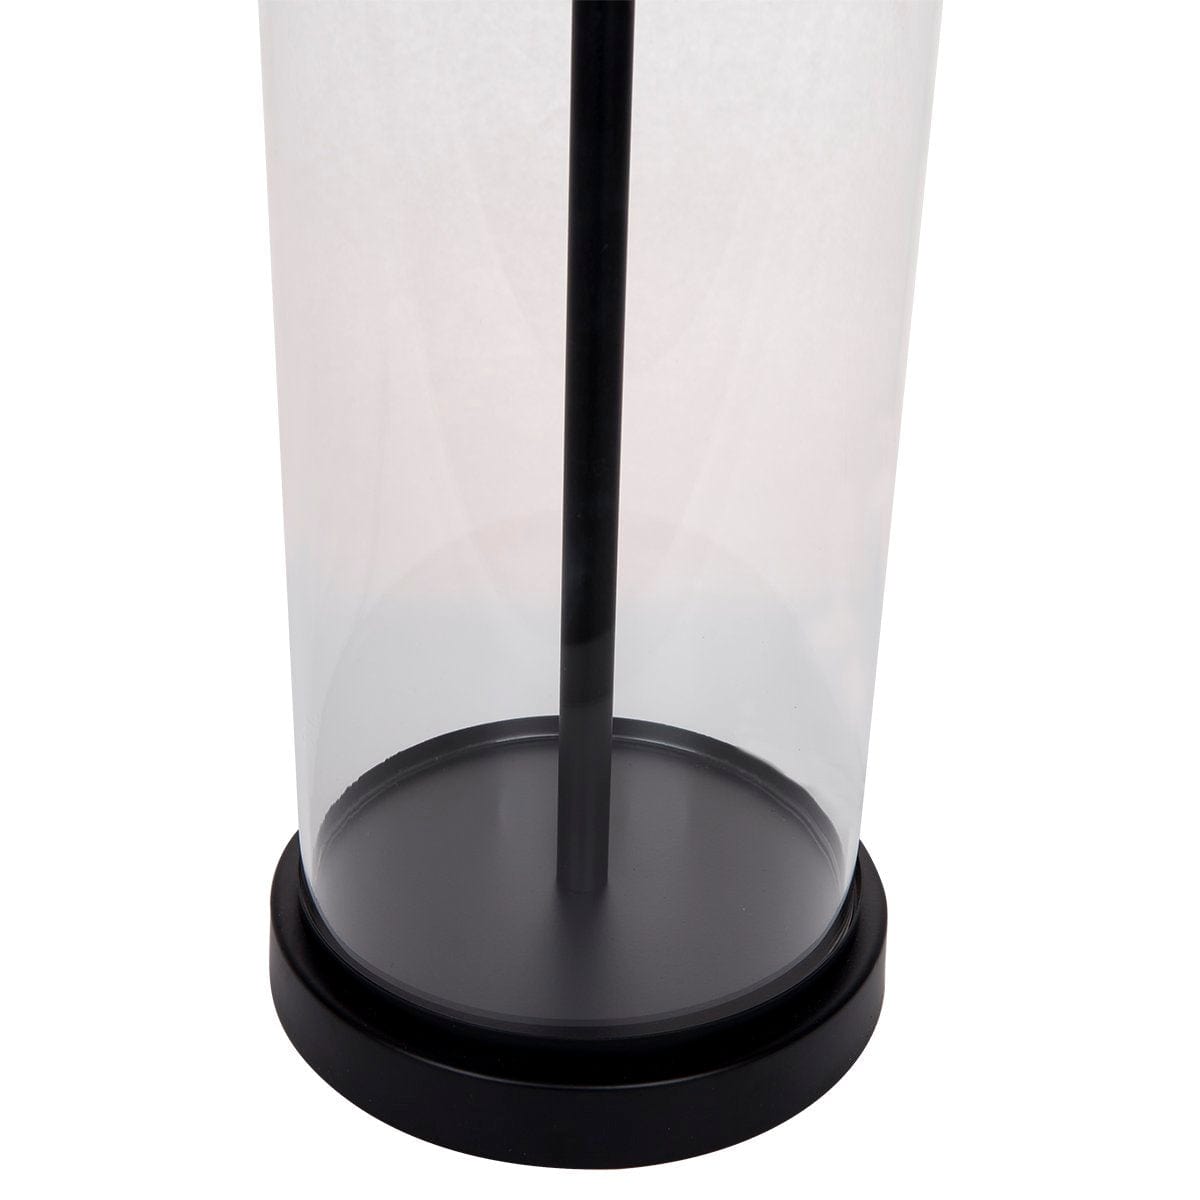 CAFE LIGHTING & LIVING Table Lamp Left Bank Table Lamp - Black w White Shade B12260